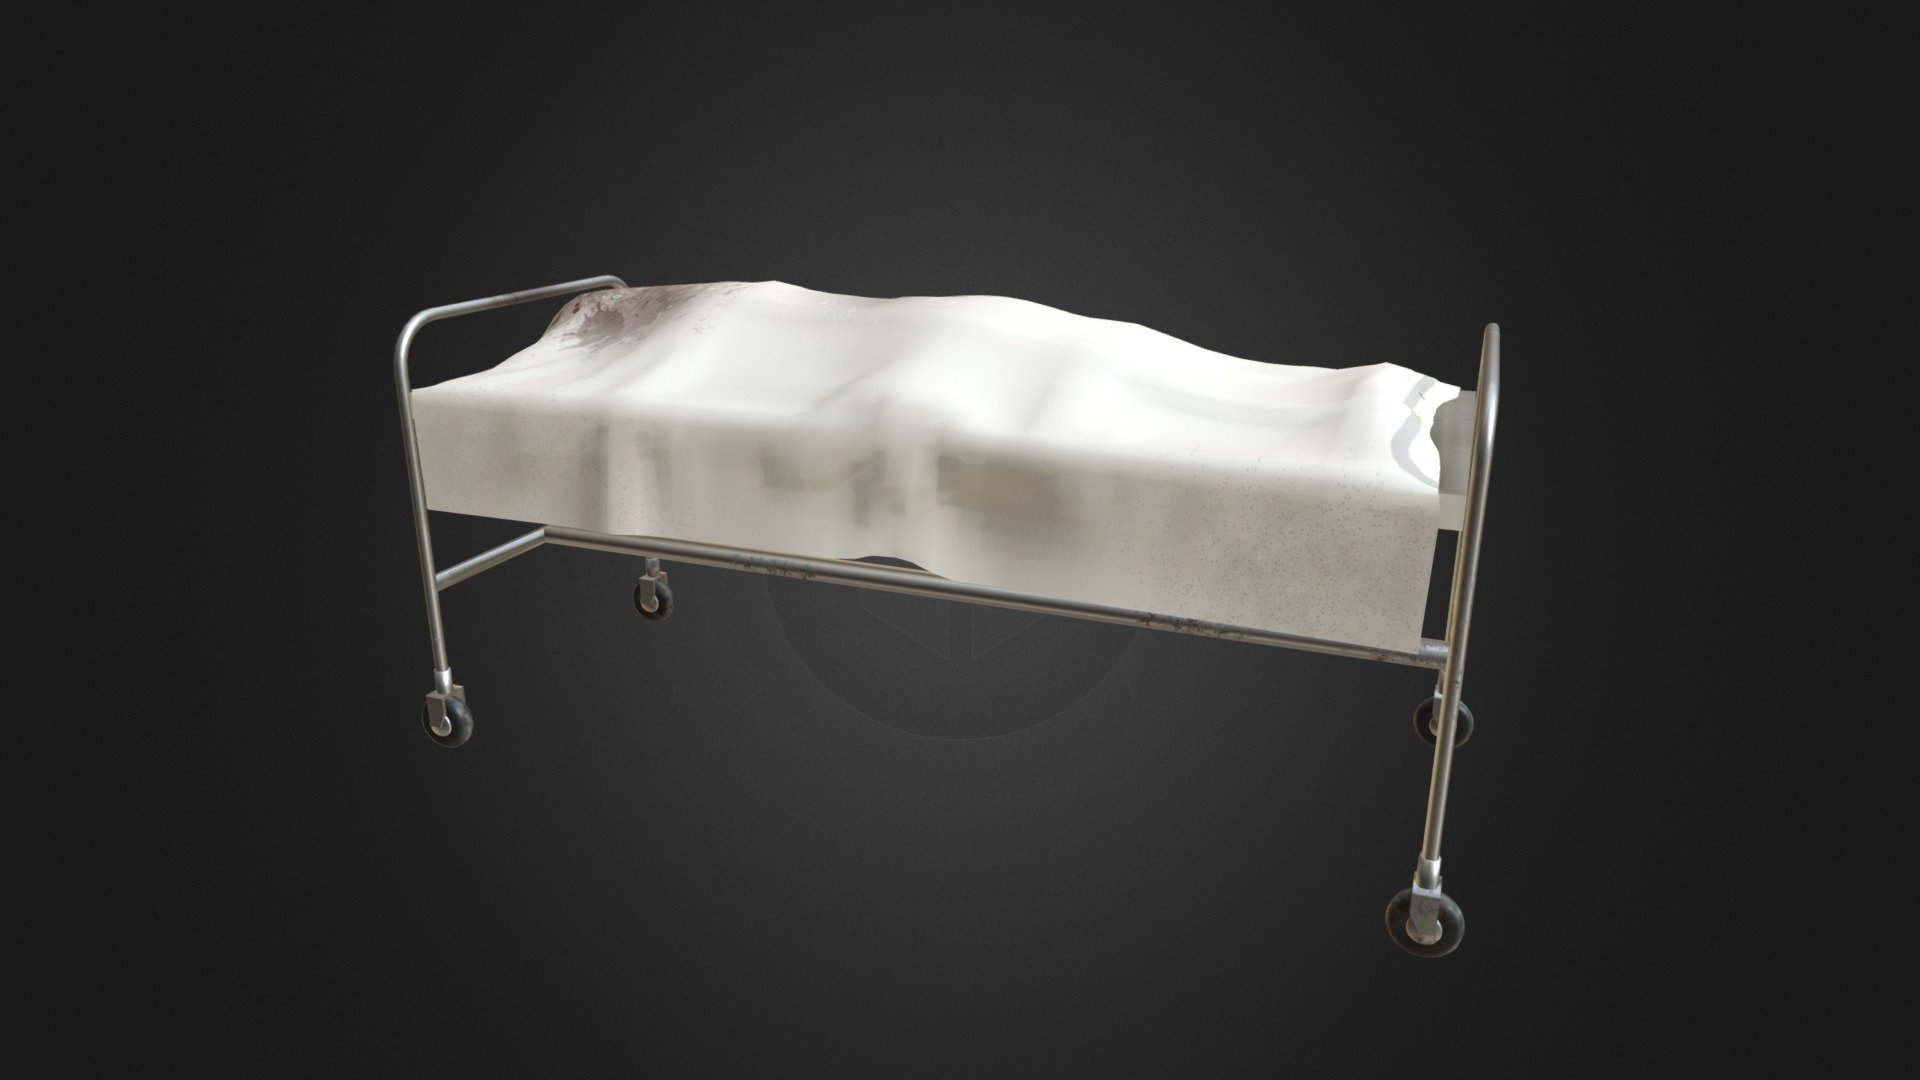 Covered Cadaver Carrier